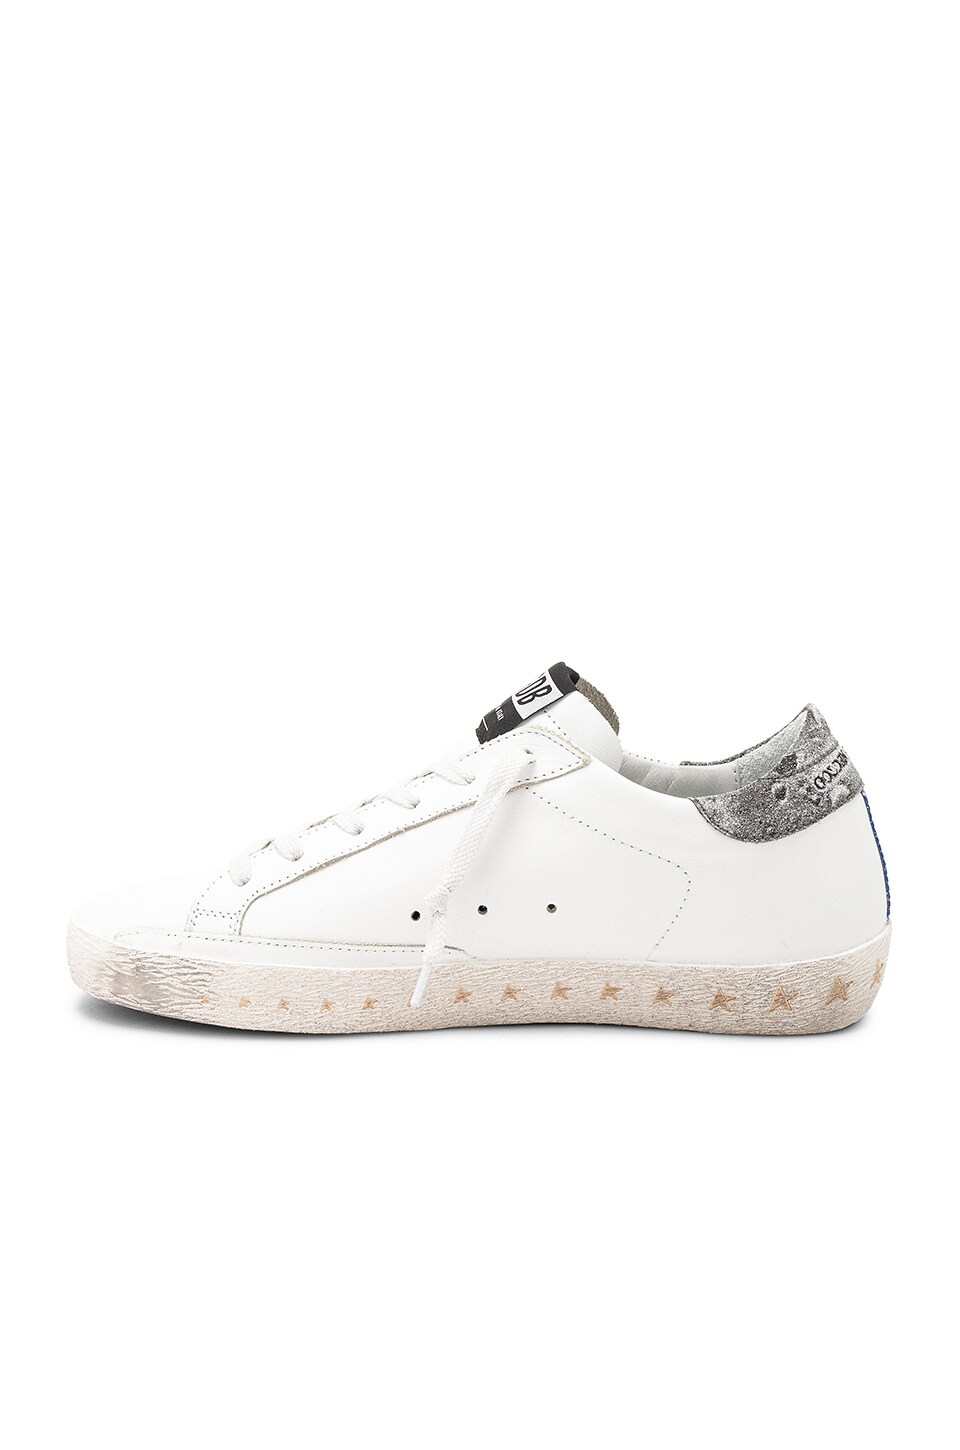 Golden Goose Superstar Sneaker in White Leather & Landed | REVOLVE